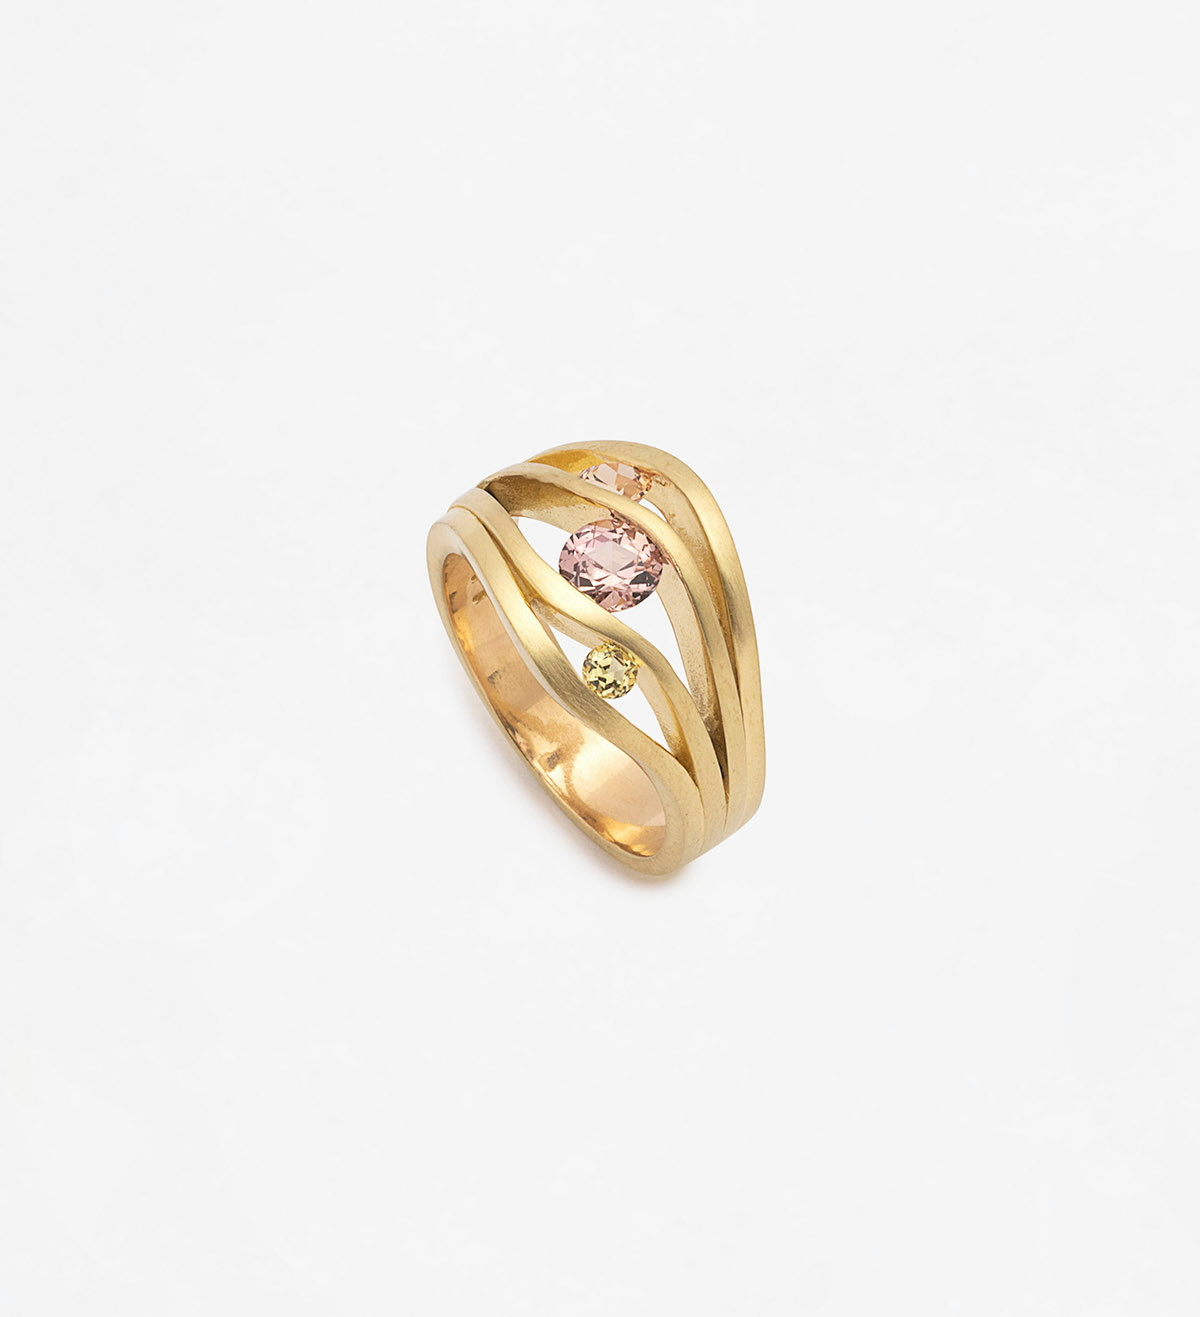 18k gold ring with orange sapphires Wennick-Lefèvre 0.80ct